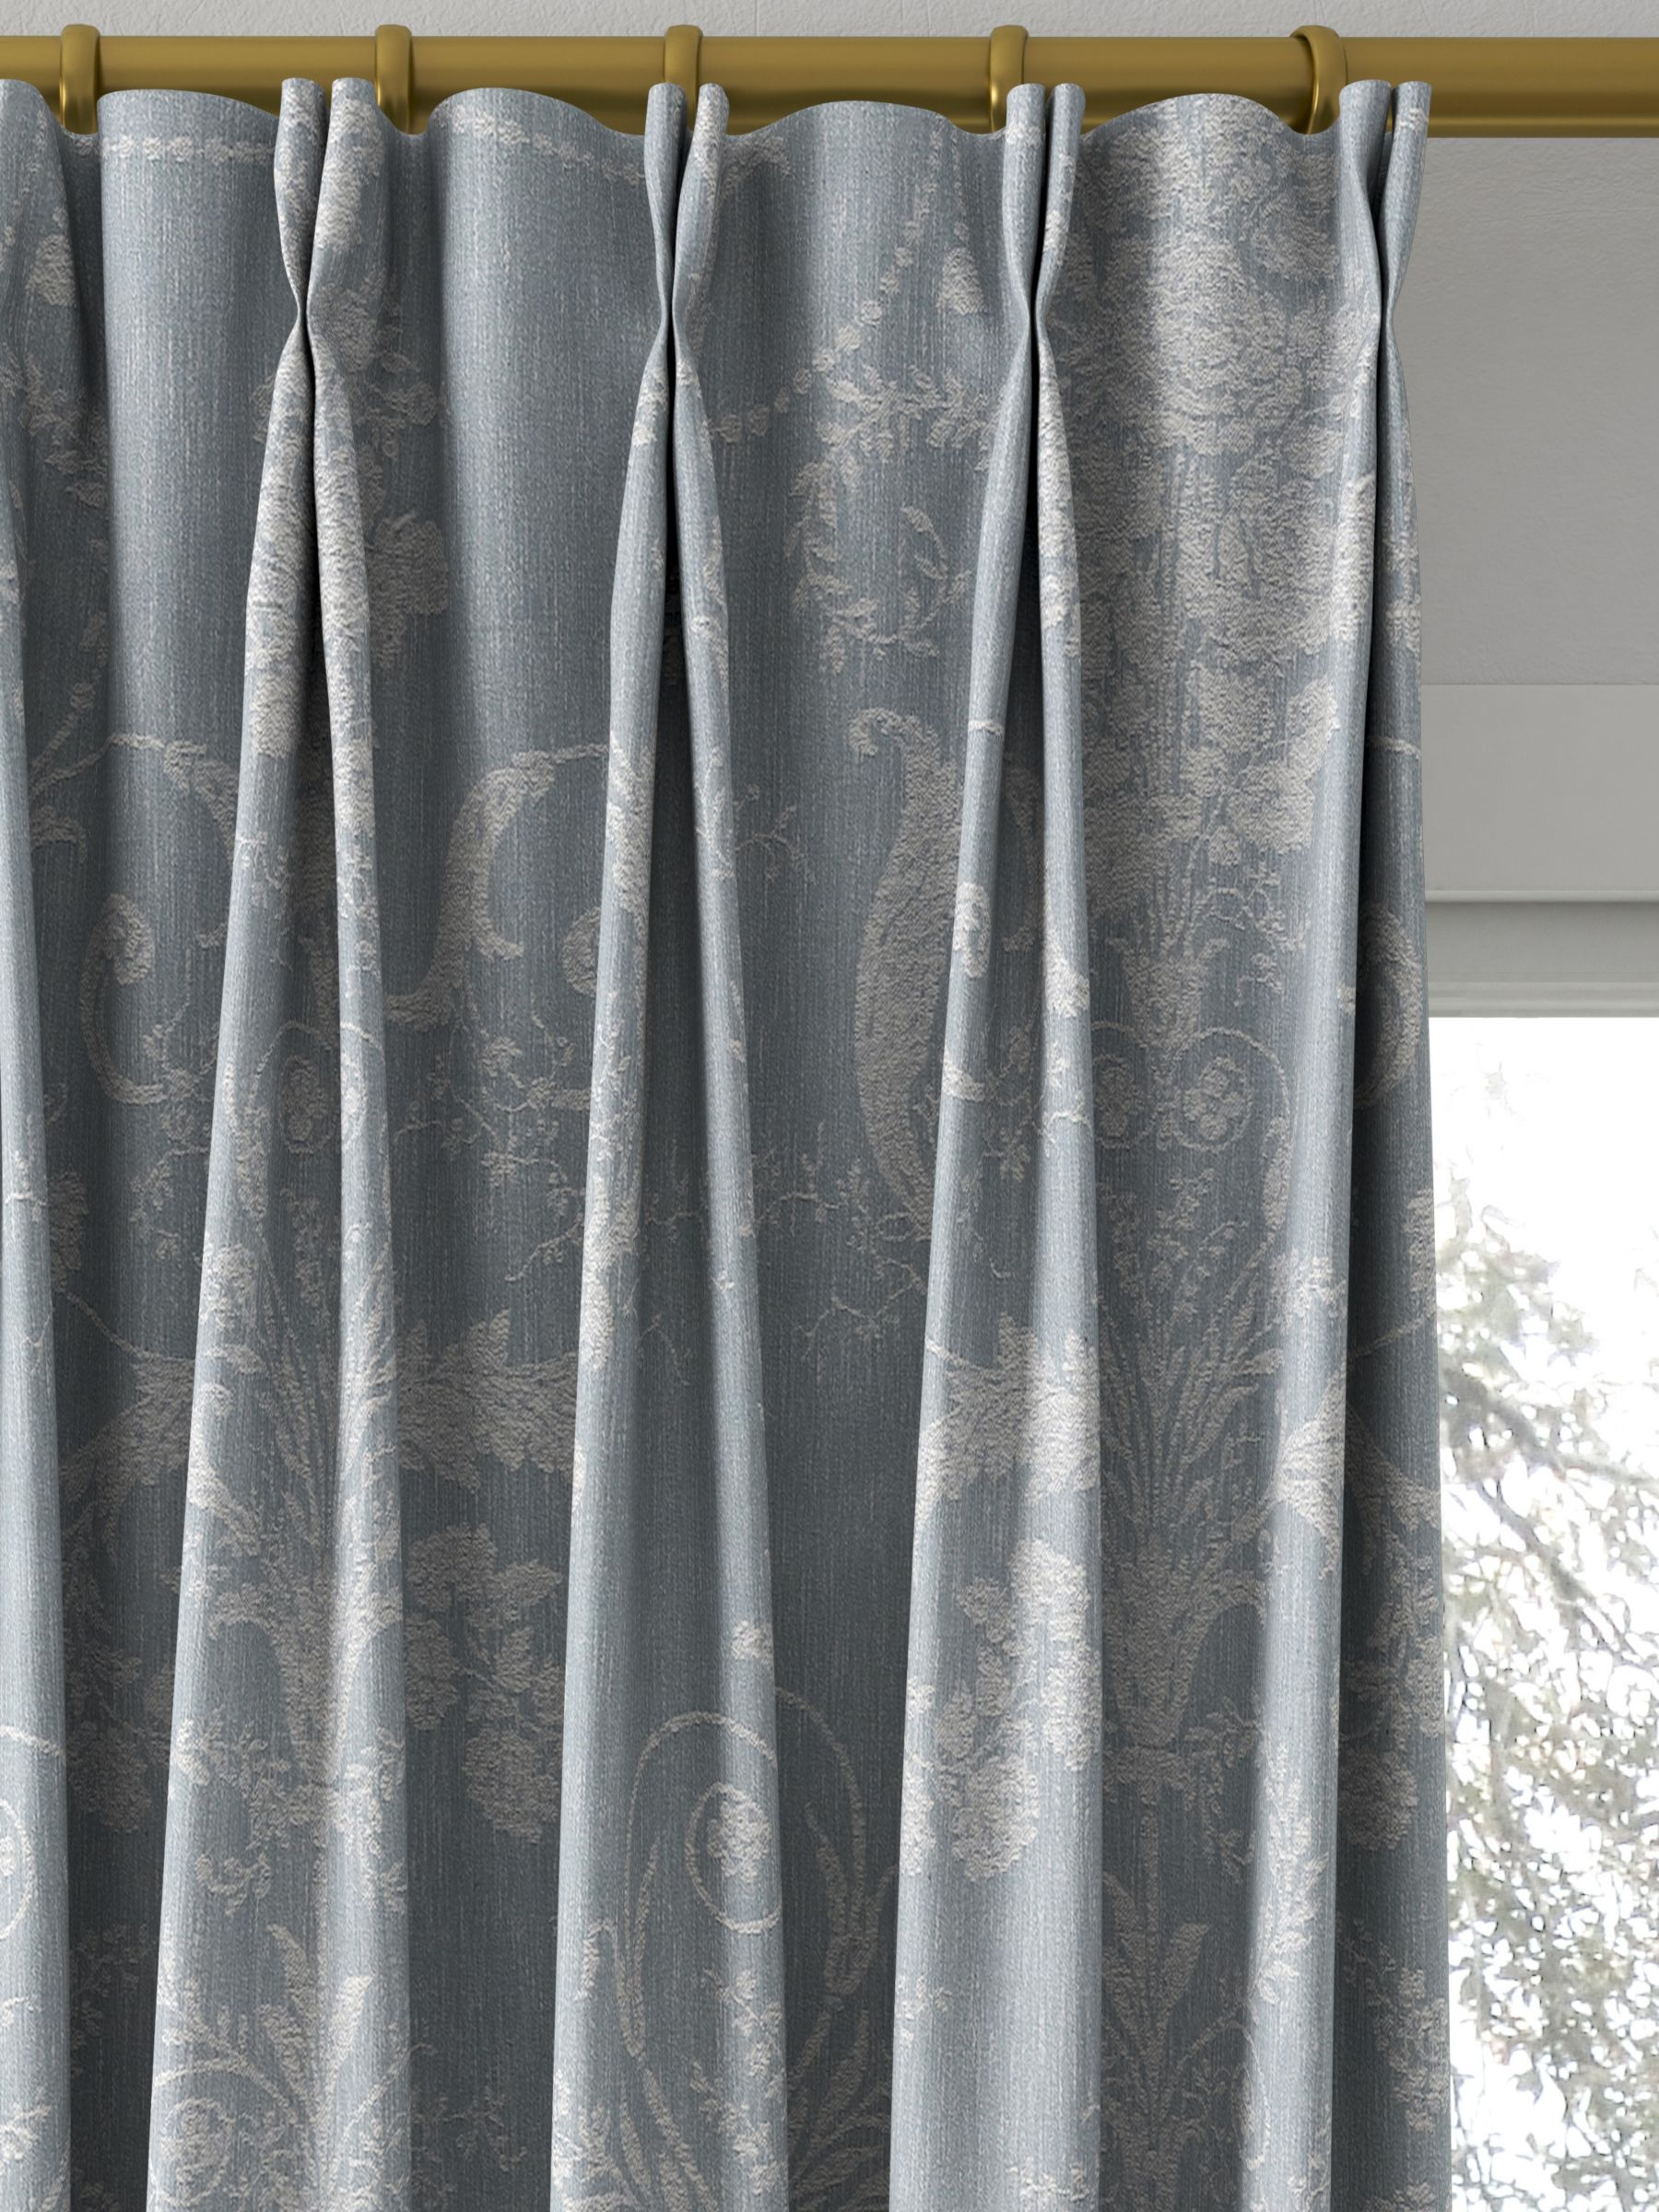 Laura Ashley Josette Woven Made to Measure Curtains, Pale Seaspray